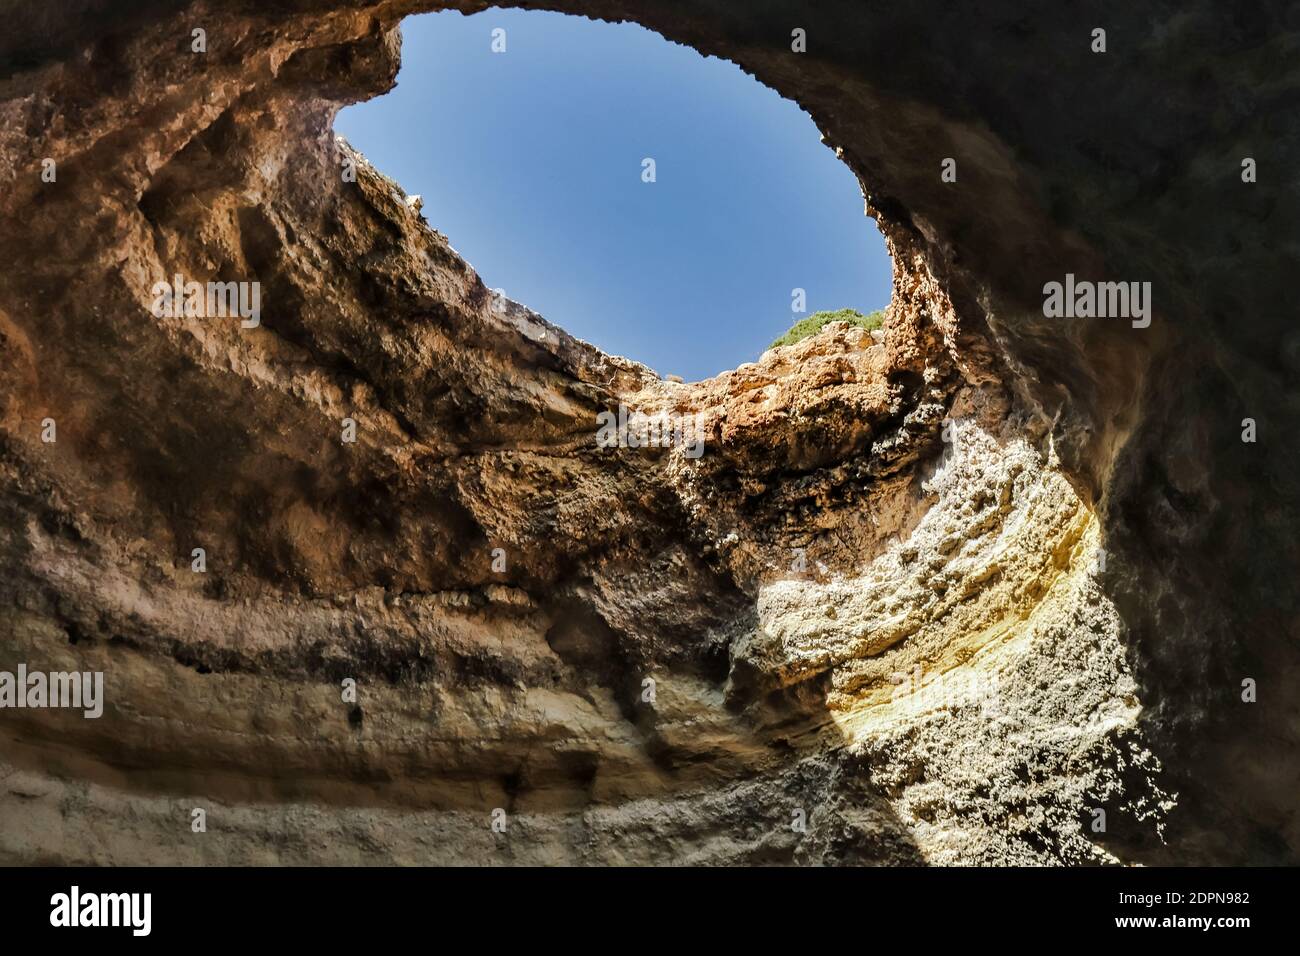 Chaminé Geológica Da Gruta De Benagil - Geological Chimney Of The Benagil Grotto Stock Photo